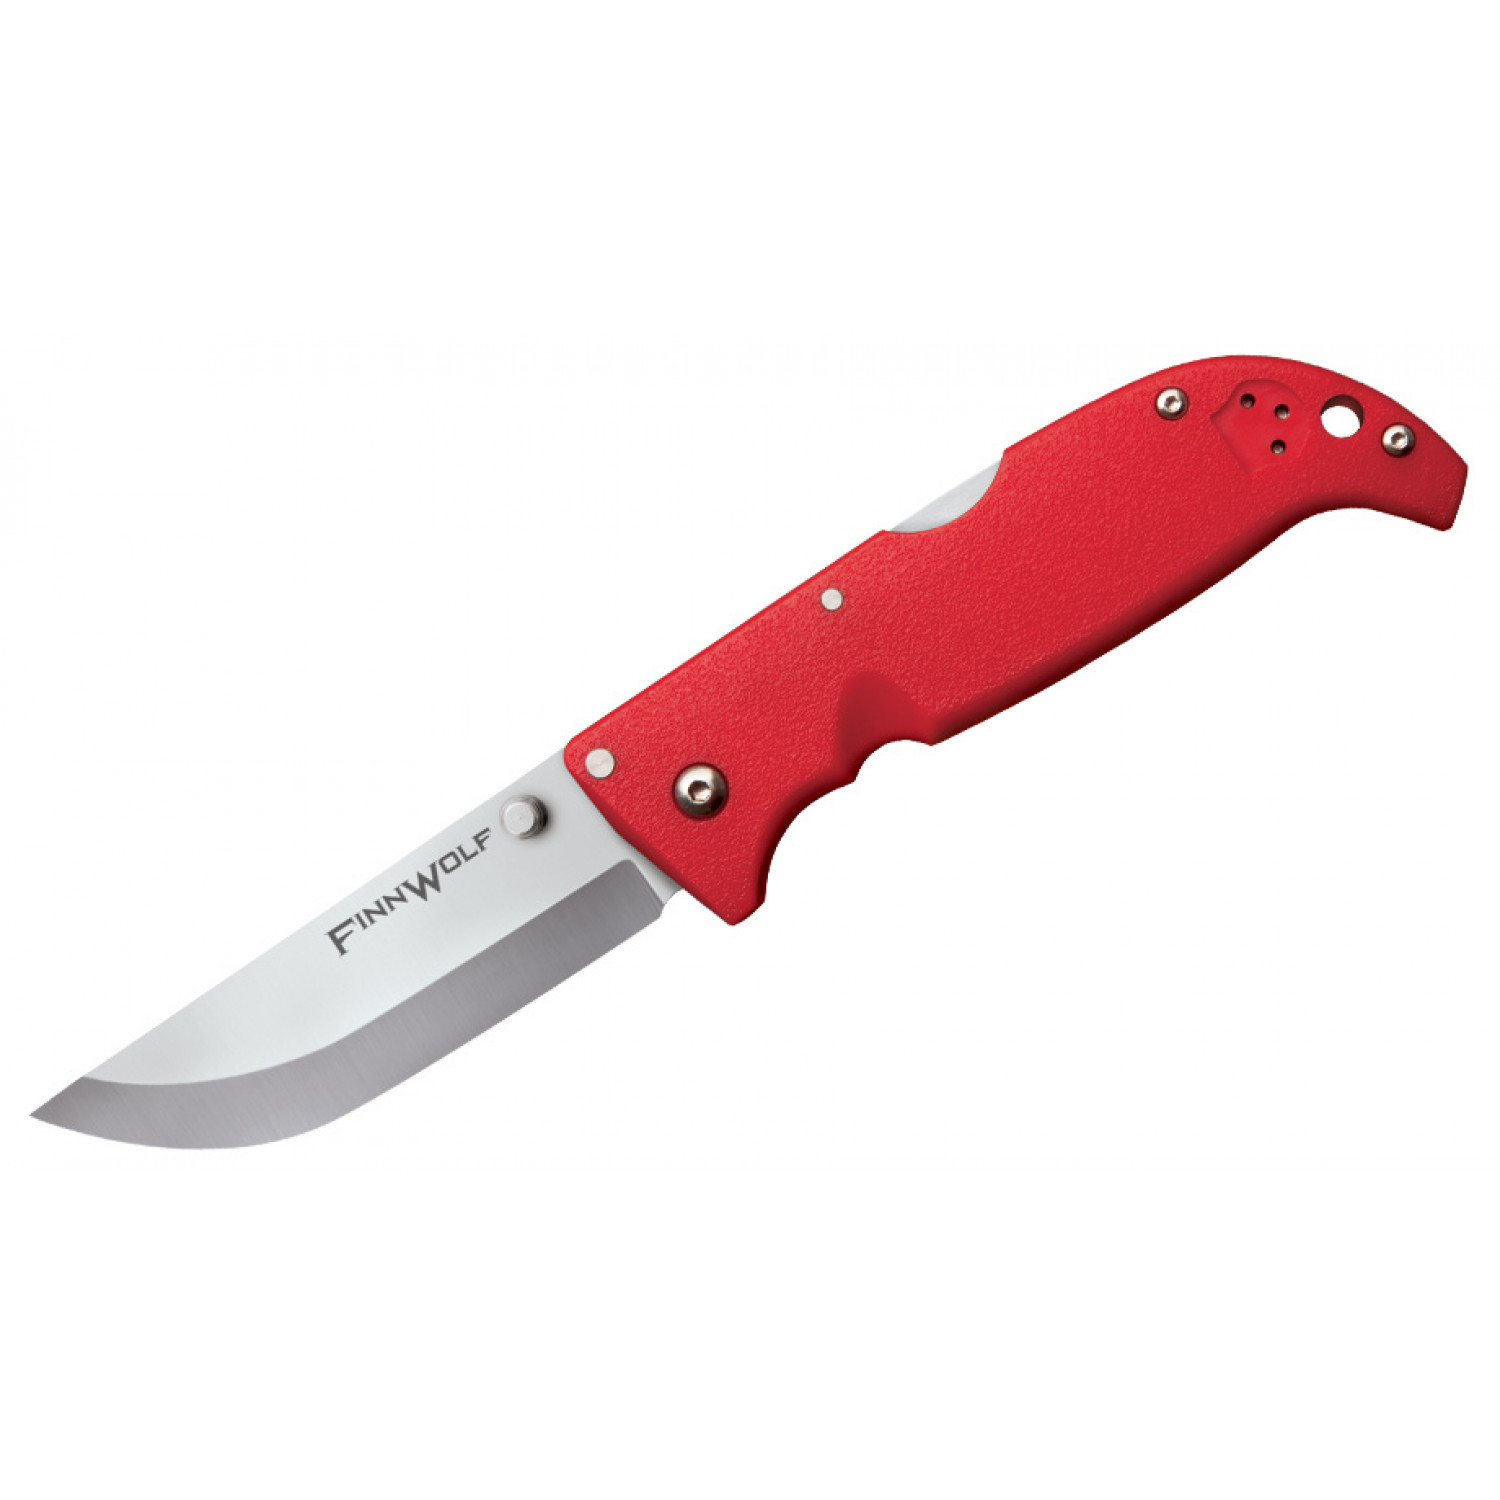 Складной нож Finn Wolf (Red) - Cold Steel 20NPRDZ, сталь AUS 8A, рукоять Grivory® (пластик) - фото 6